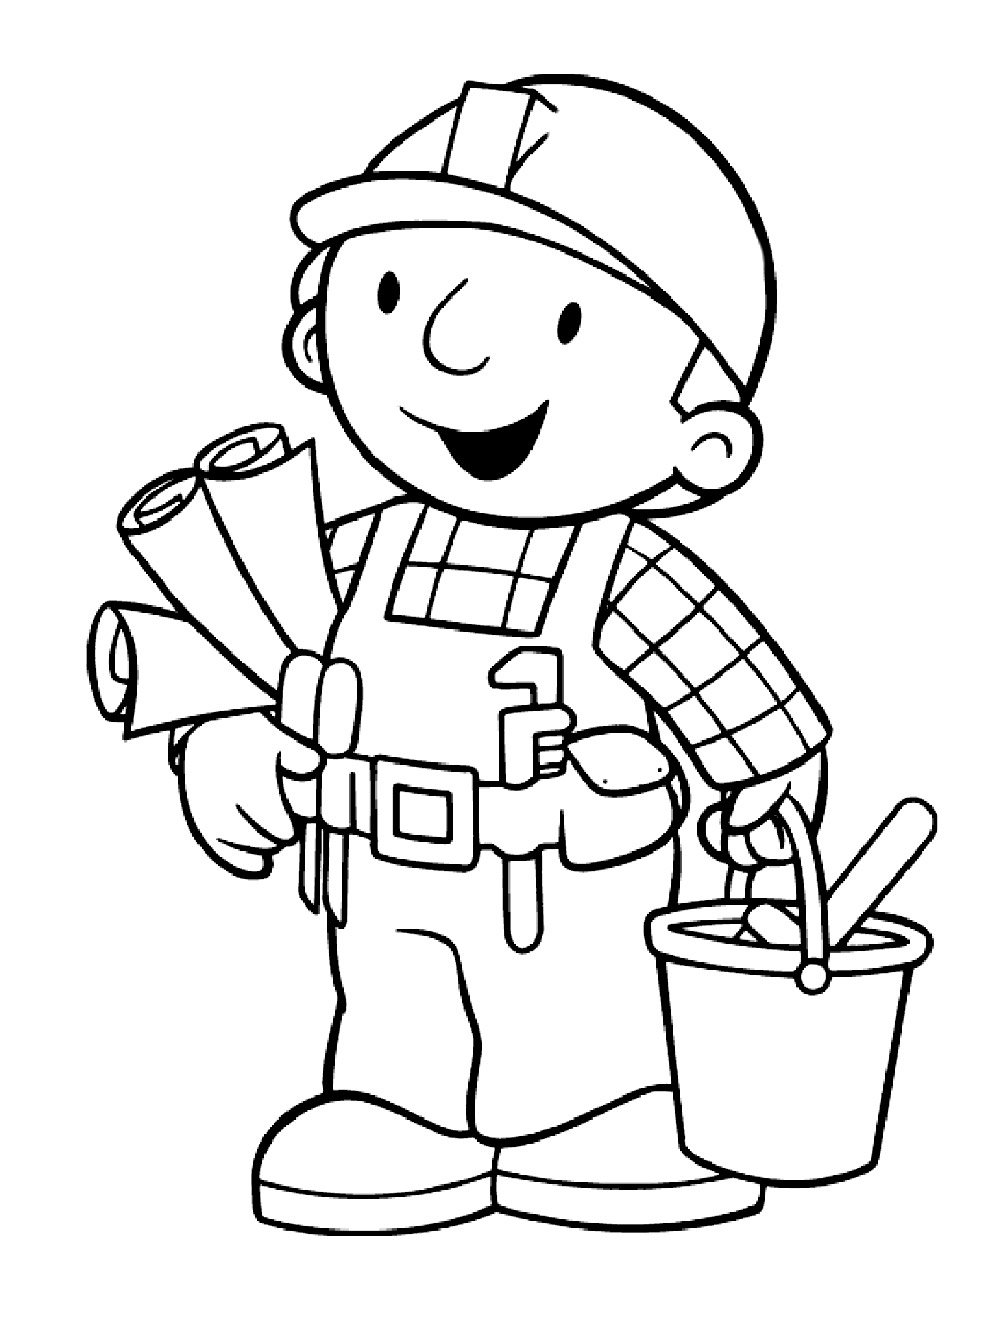 Bob the Builder раскраска